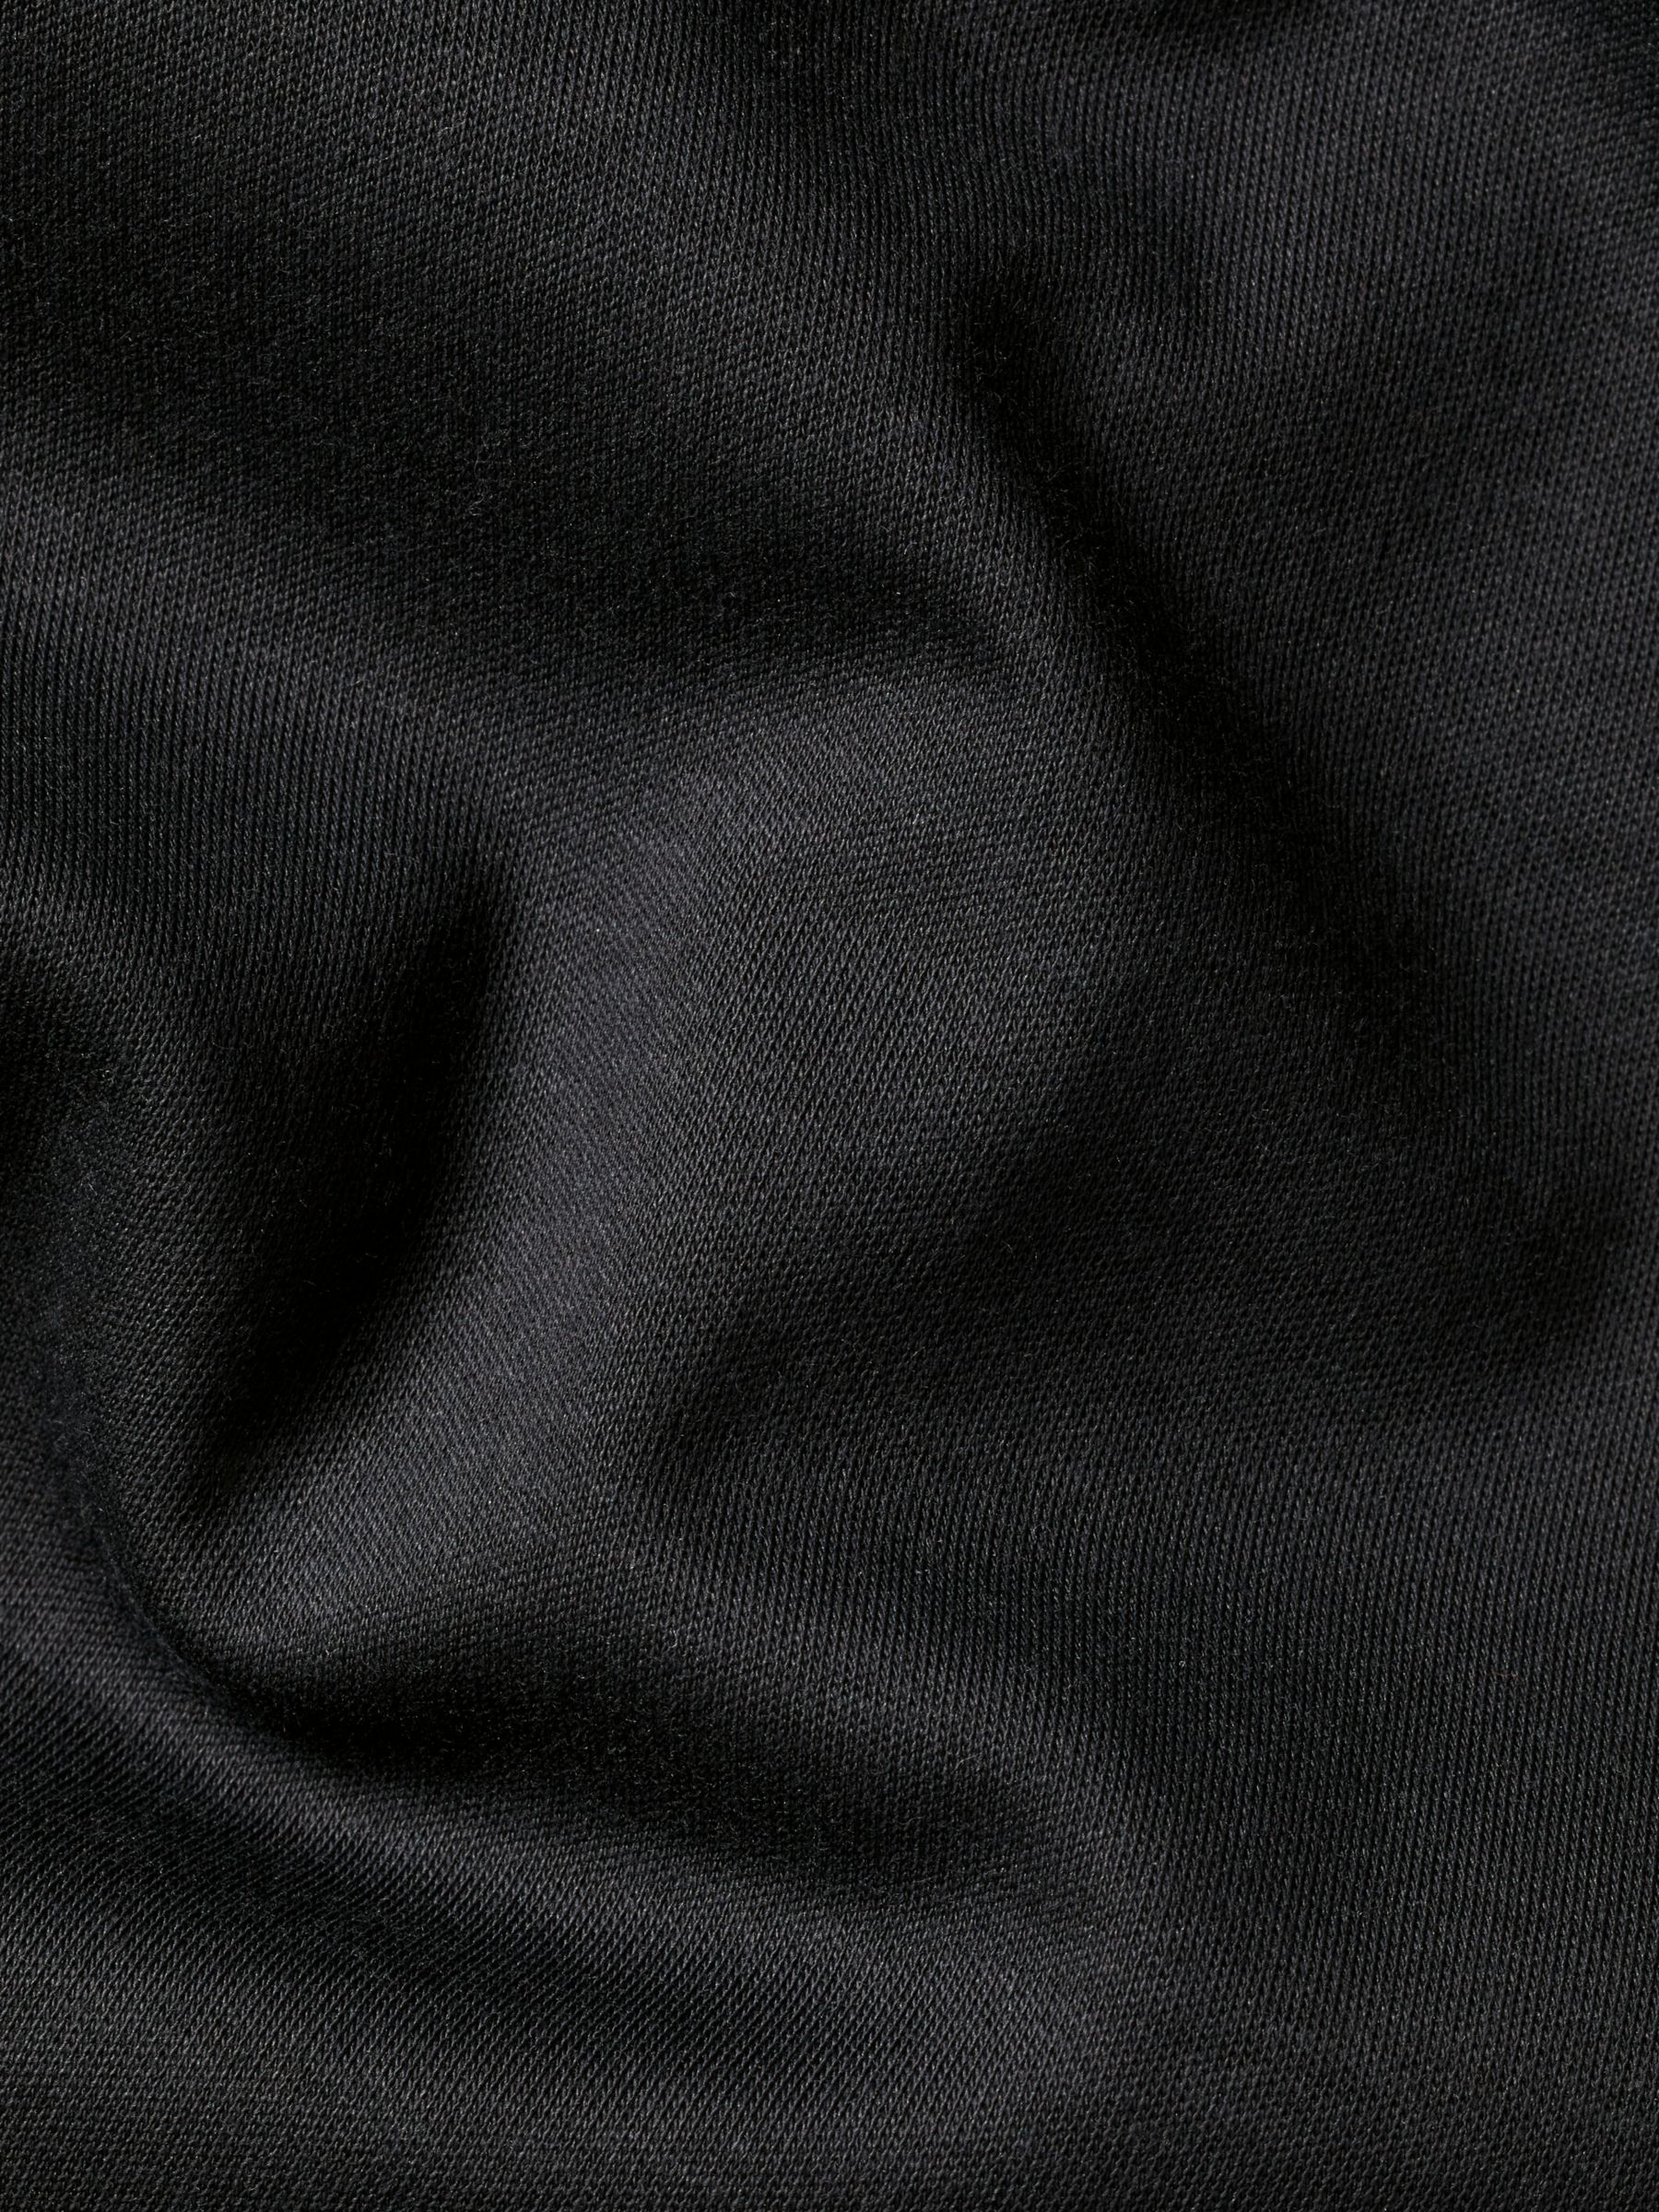 Charles Tyrwhitt Zip Neck Jersey Polo Shirt